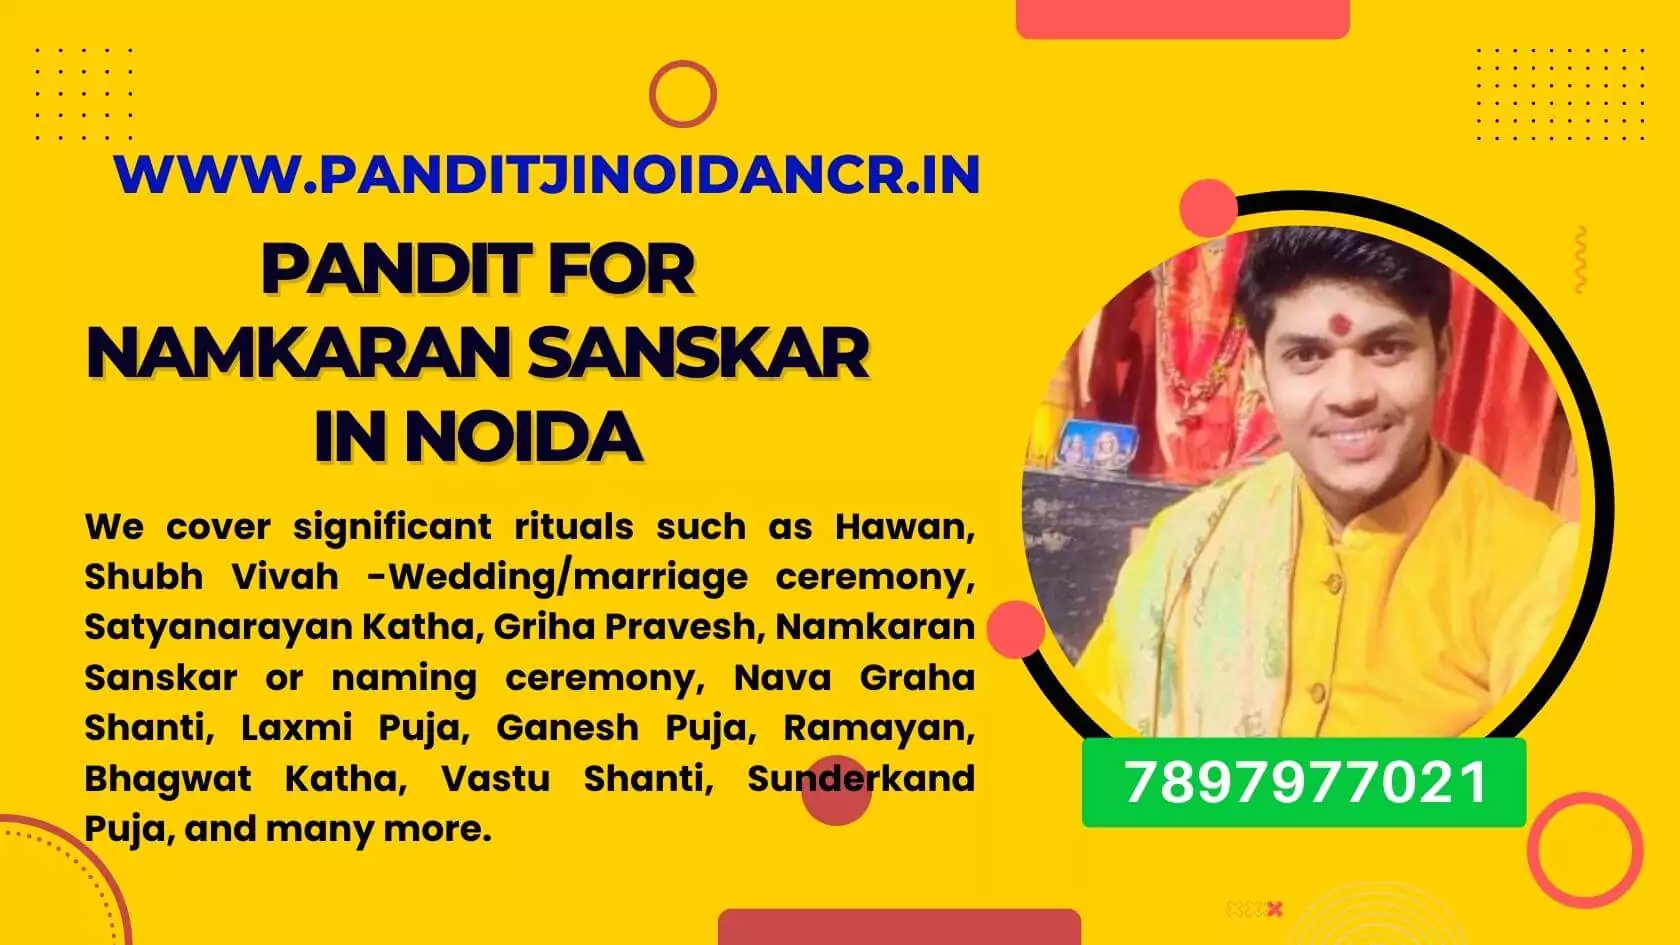 Pandit for Namkaran Sanskar in Noida